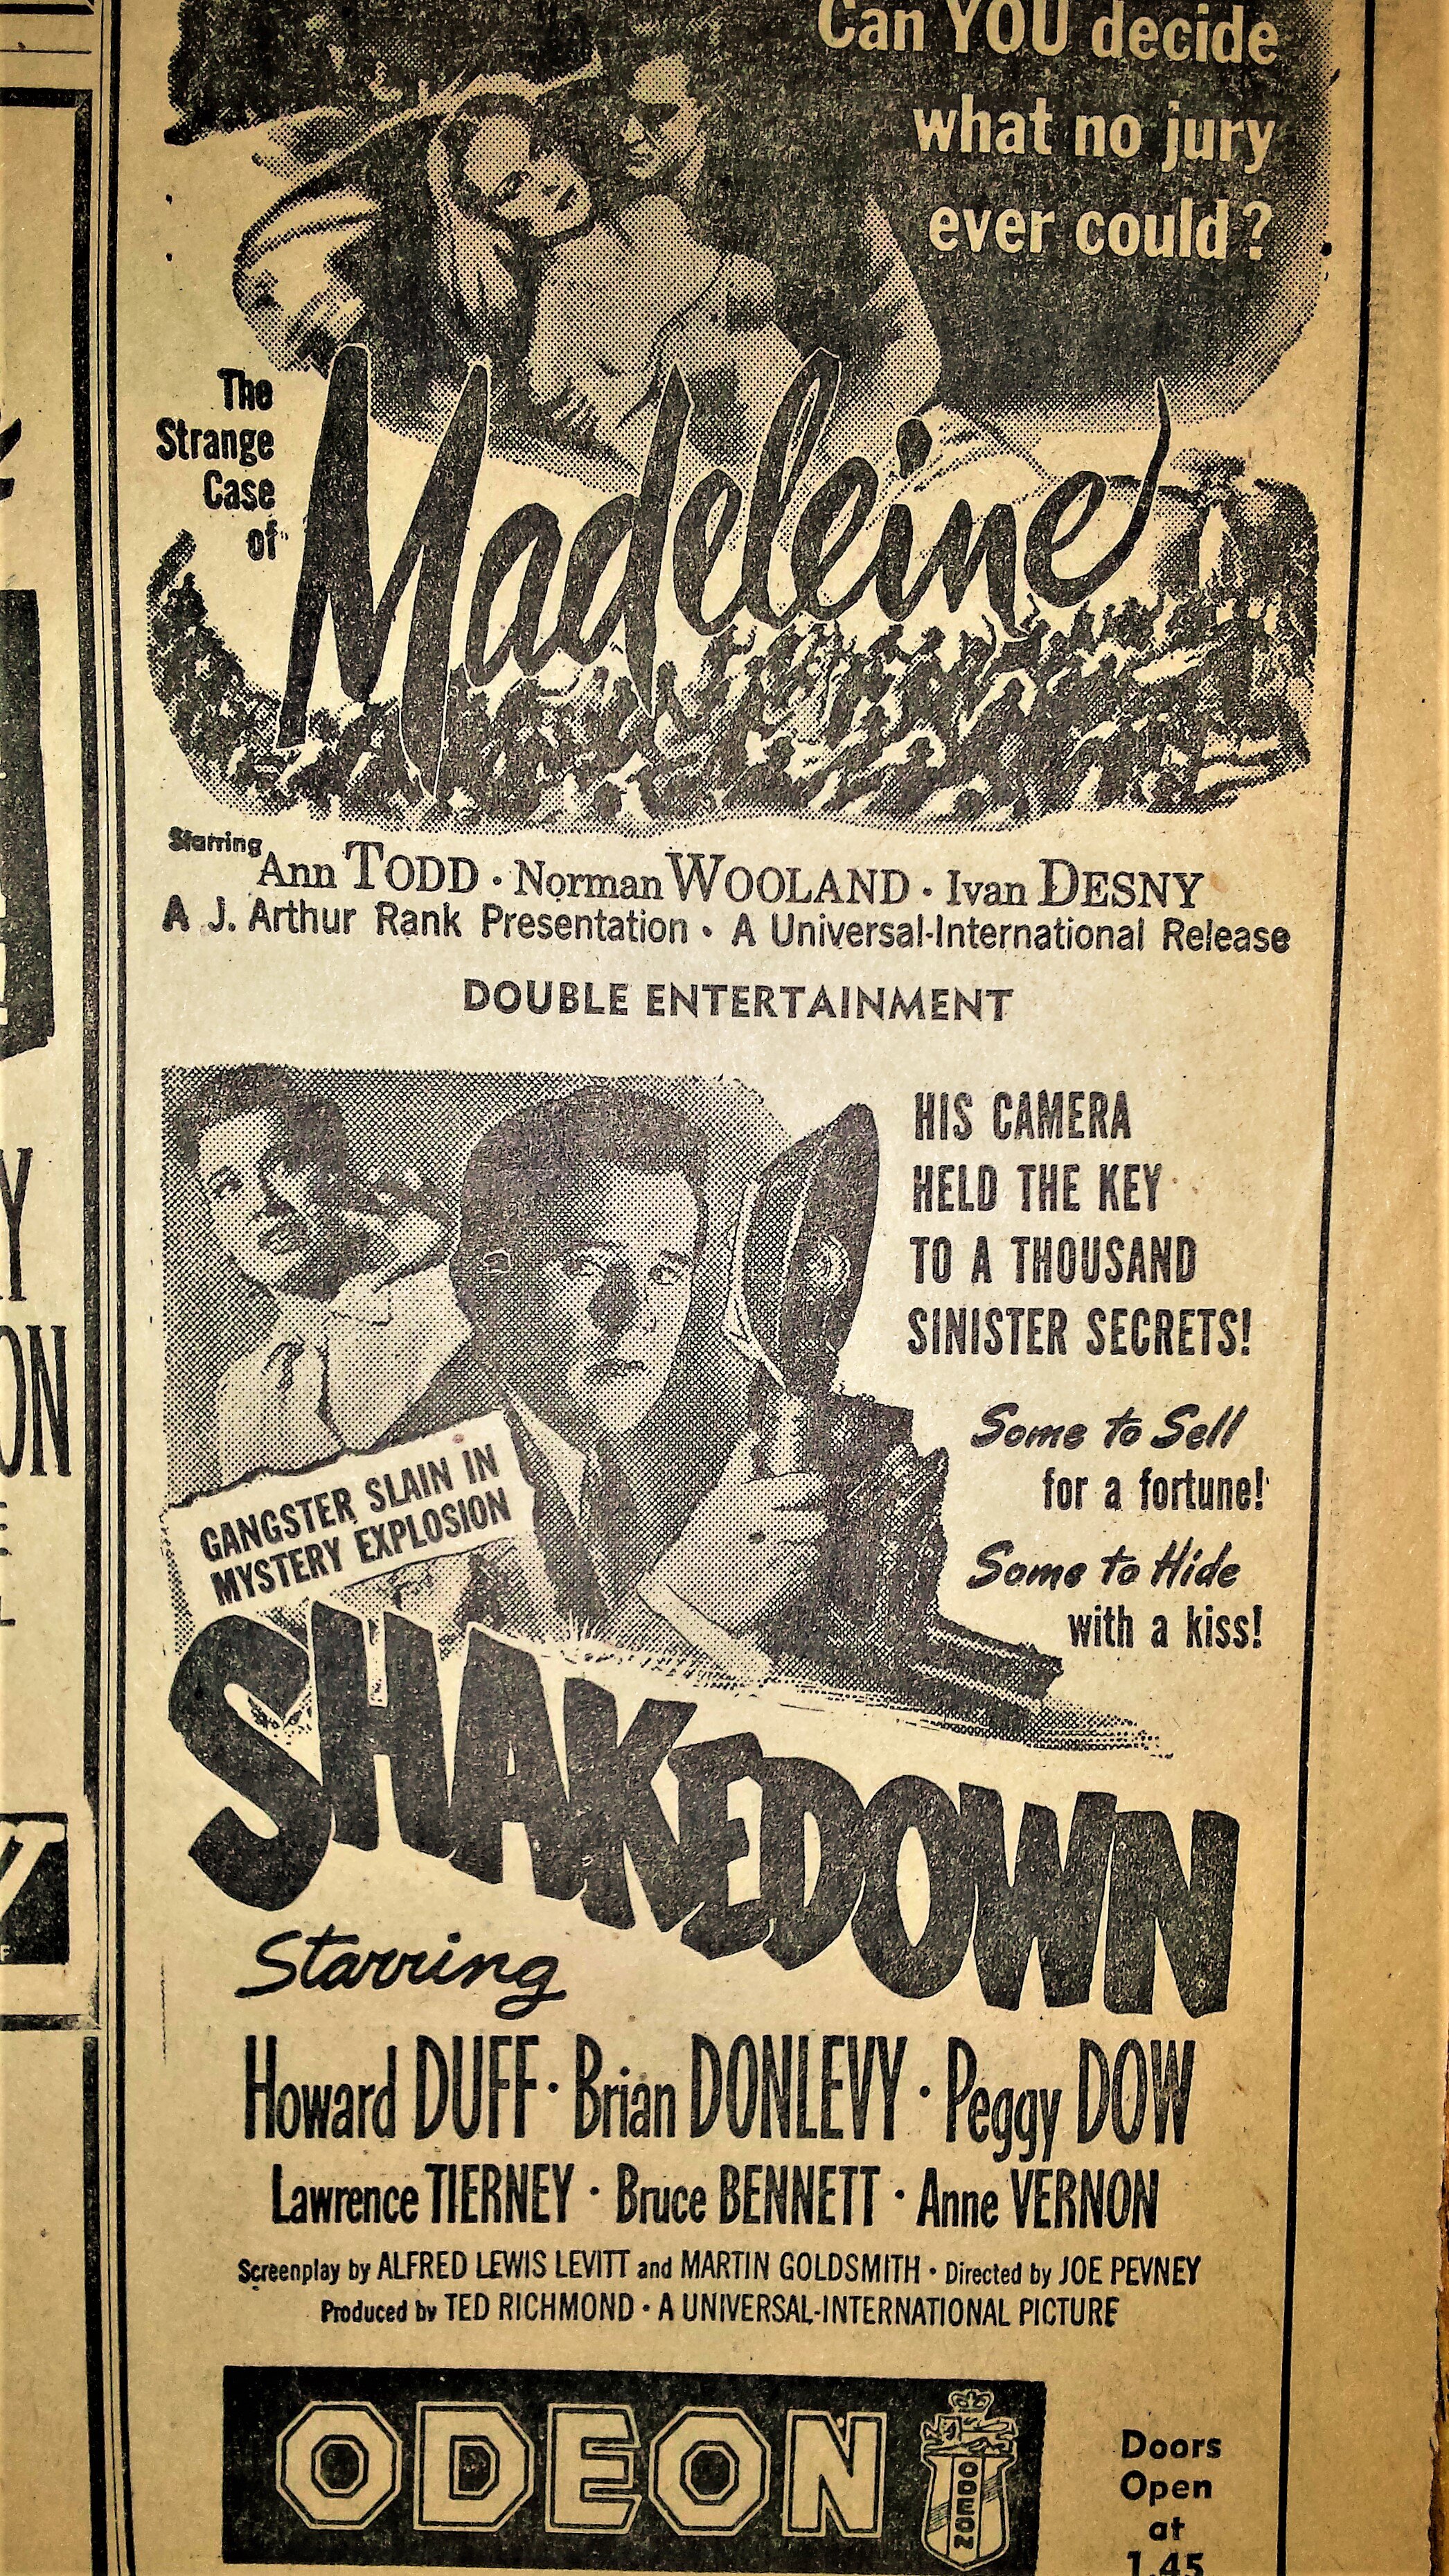 1951 May 21 p7 theatre ads Odeon (2).jpg